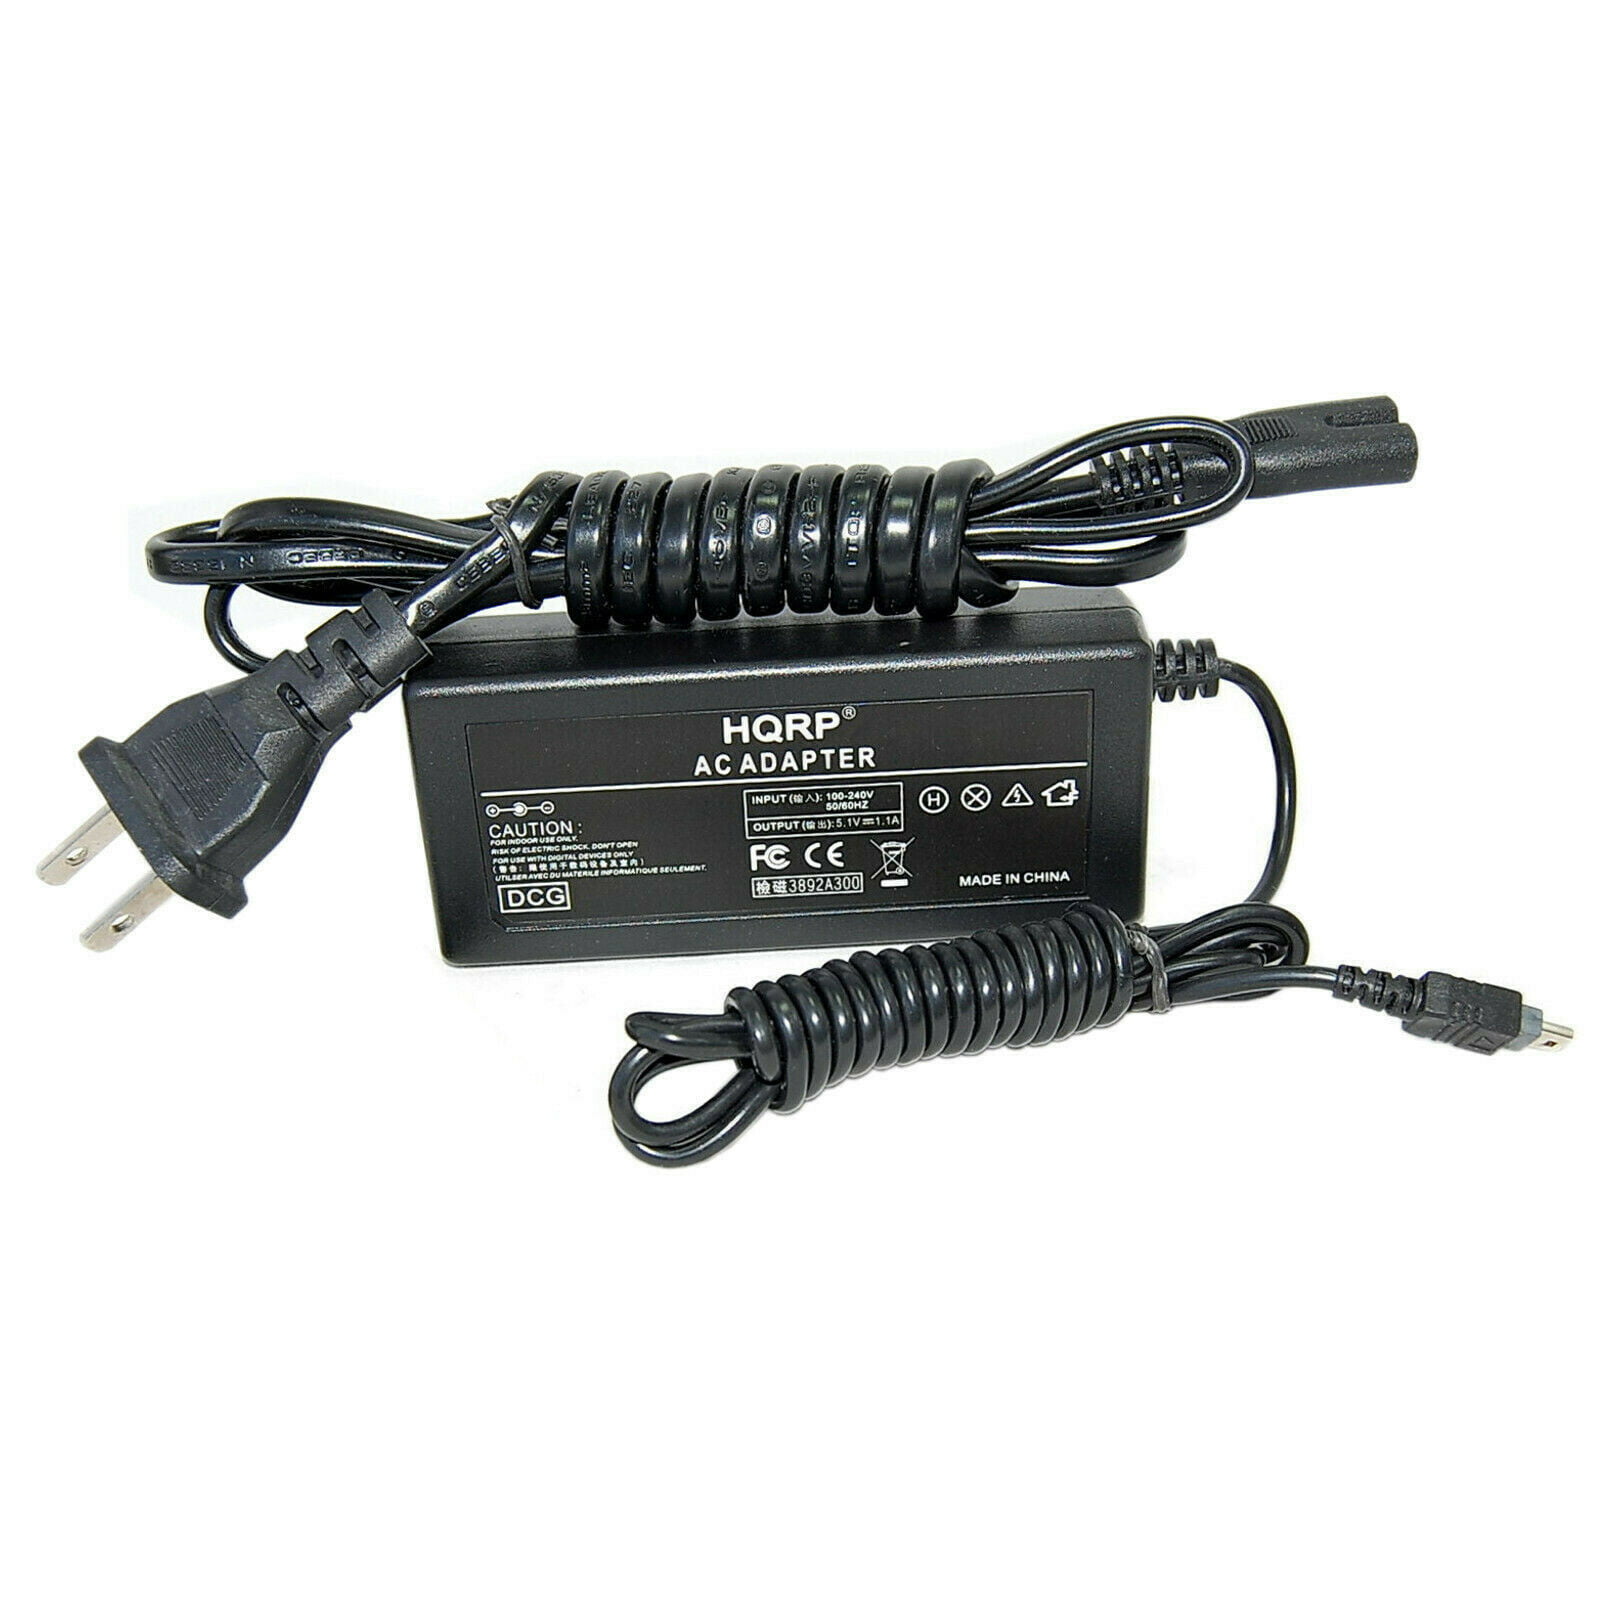 HQRP Adapter Compatible with DMW-AC5 DMC-FS20 DMC-FS3 DMC-FS5 DMC-FX12 DMC-FX30 DMC-FX33 DMC-FX35 DMC-FX50 Lumix Digital Camera Power Supply Cord Adaptor DMW-AC5PP - Walmart.com